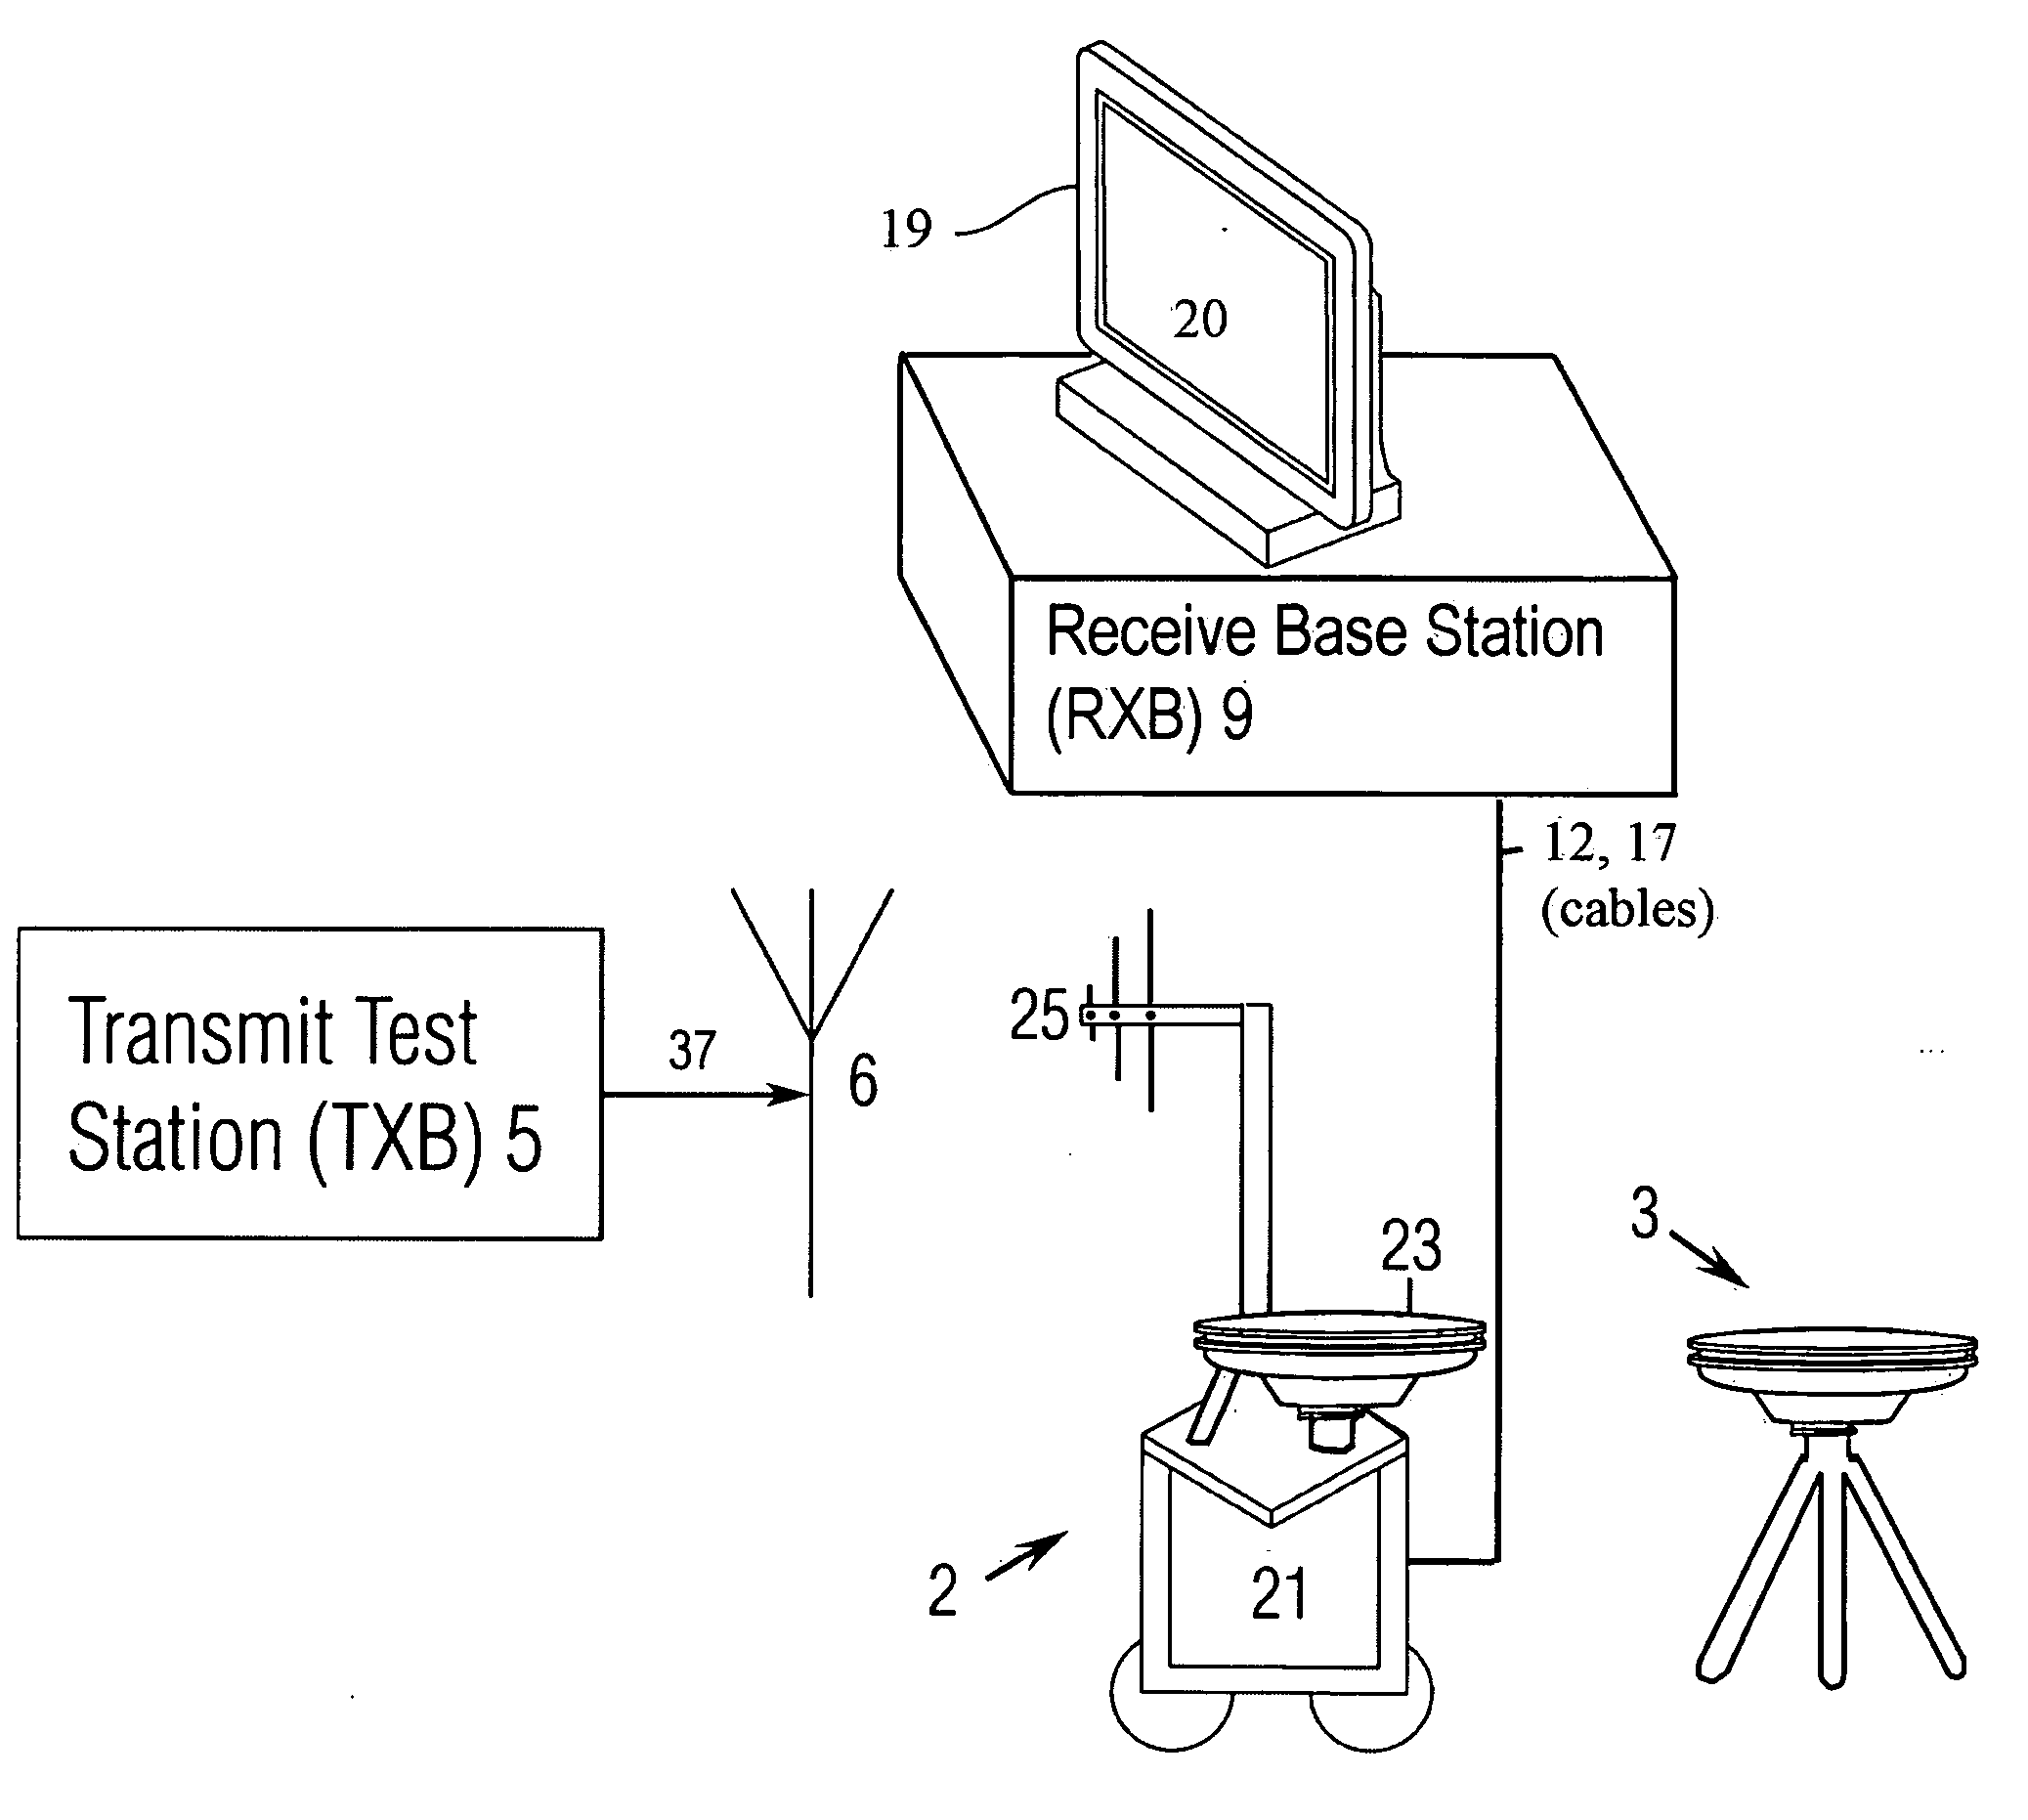 Antenna test system